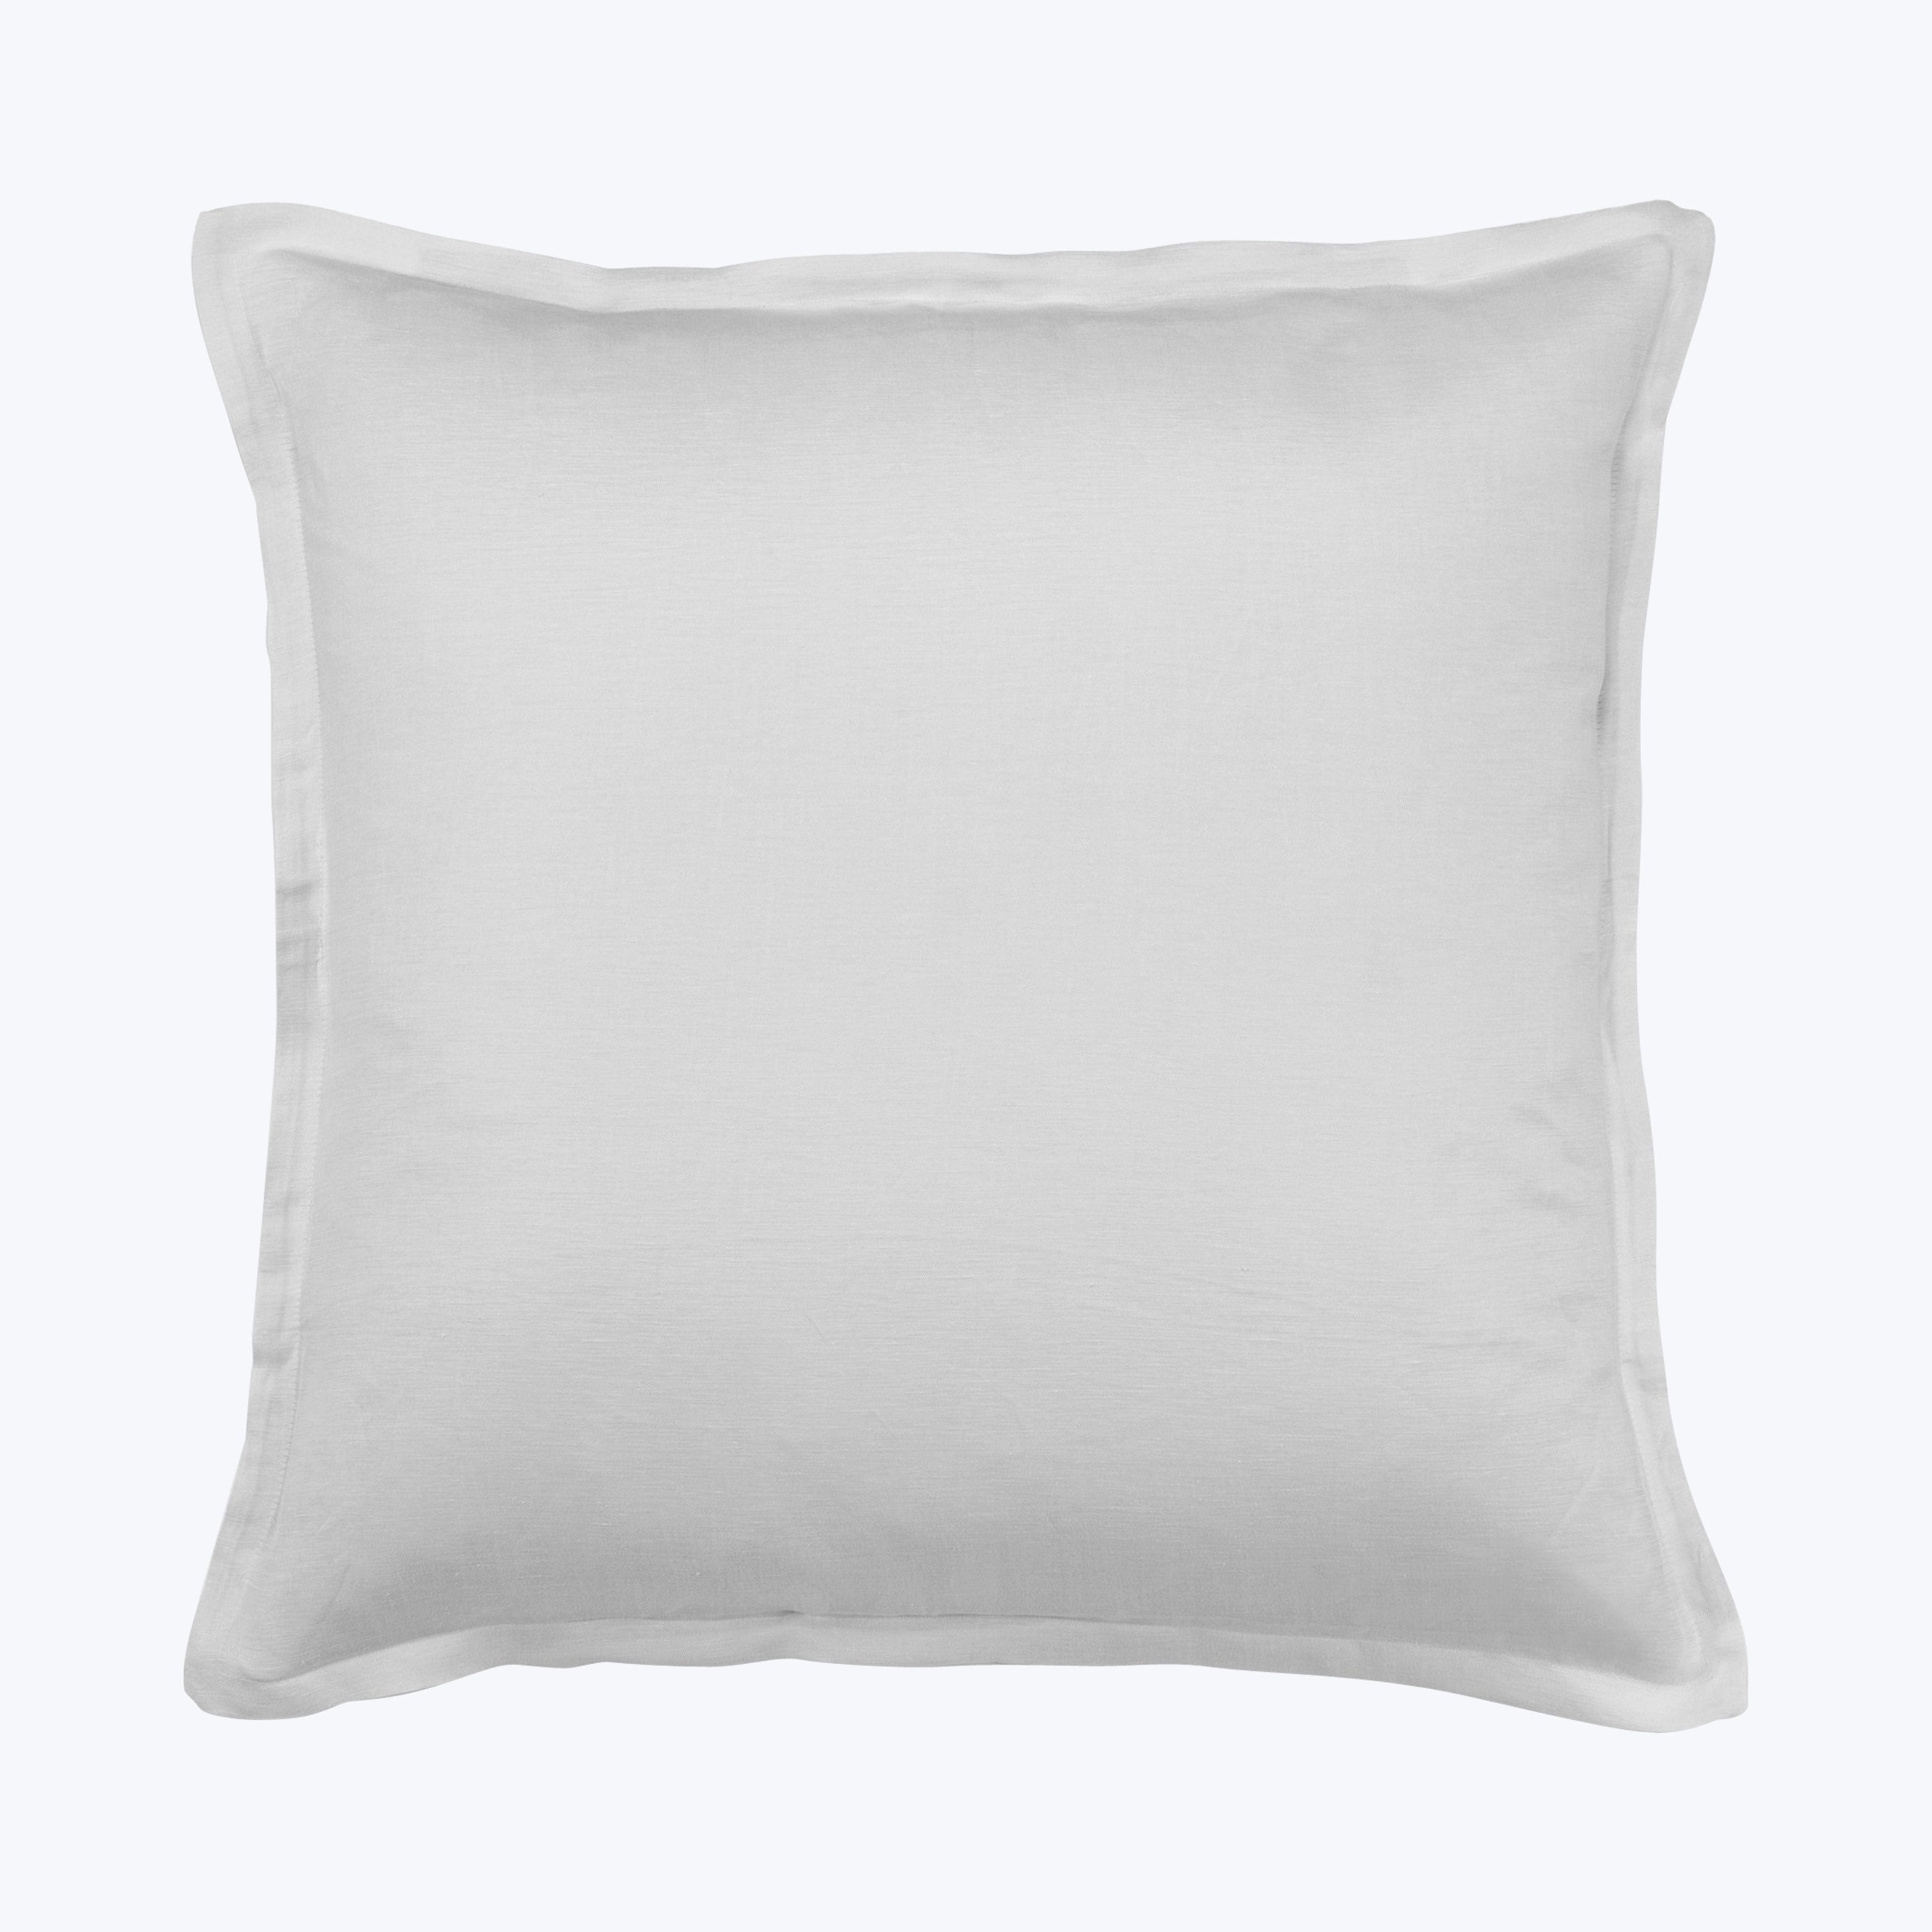 Cupro Linen Bedding Pillow Sham / Euro / White